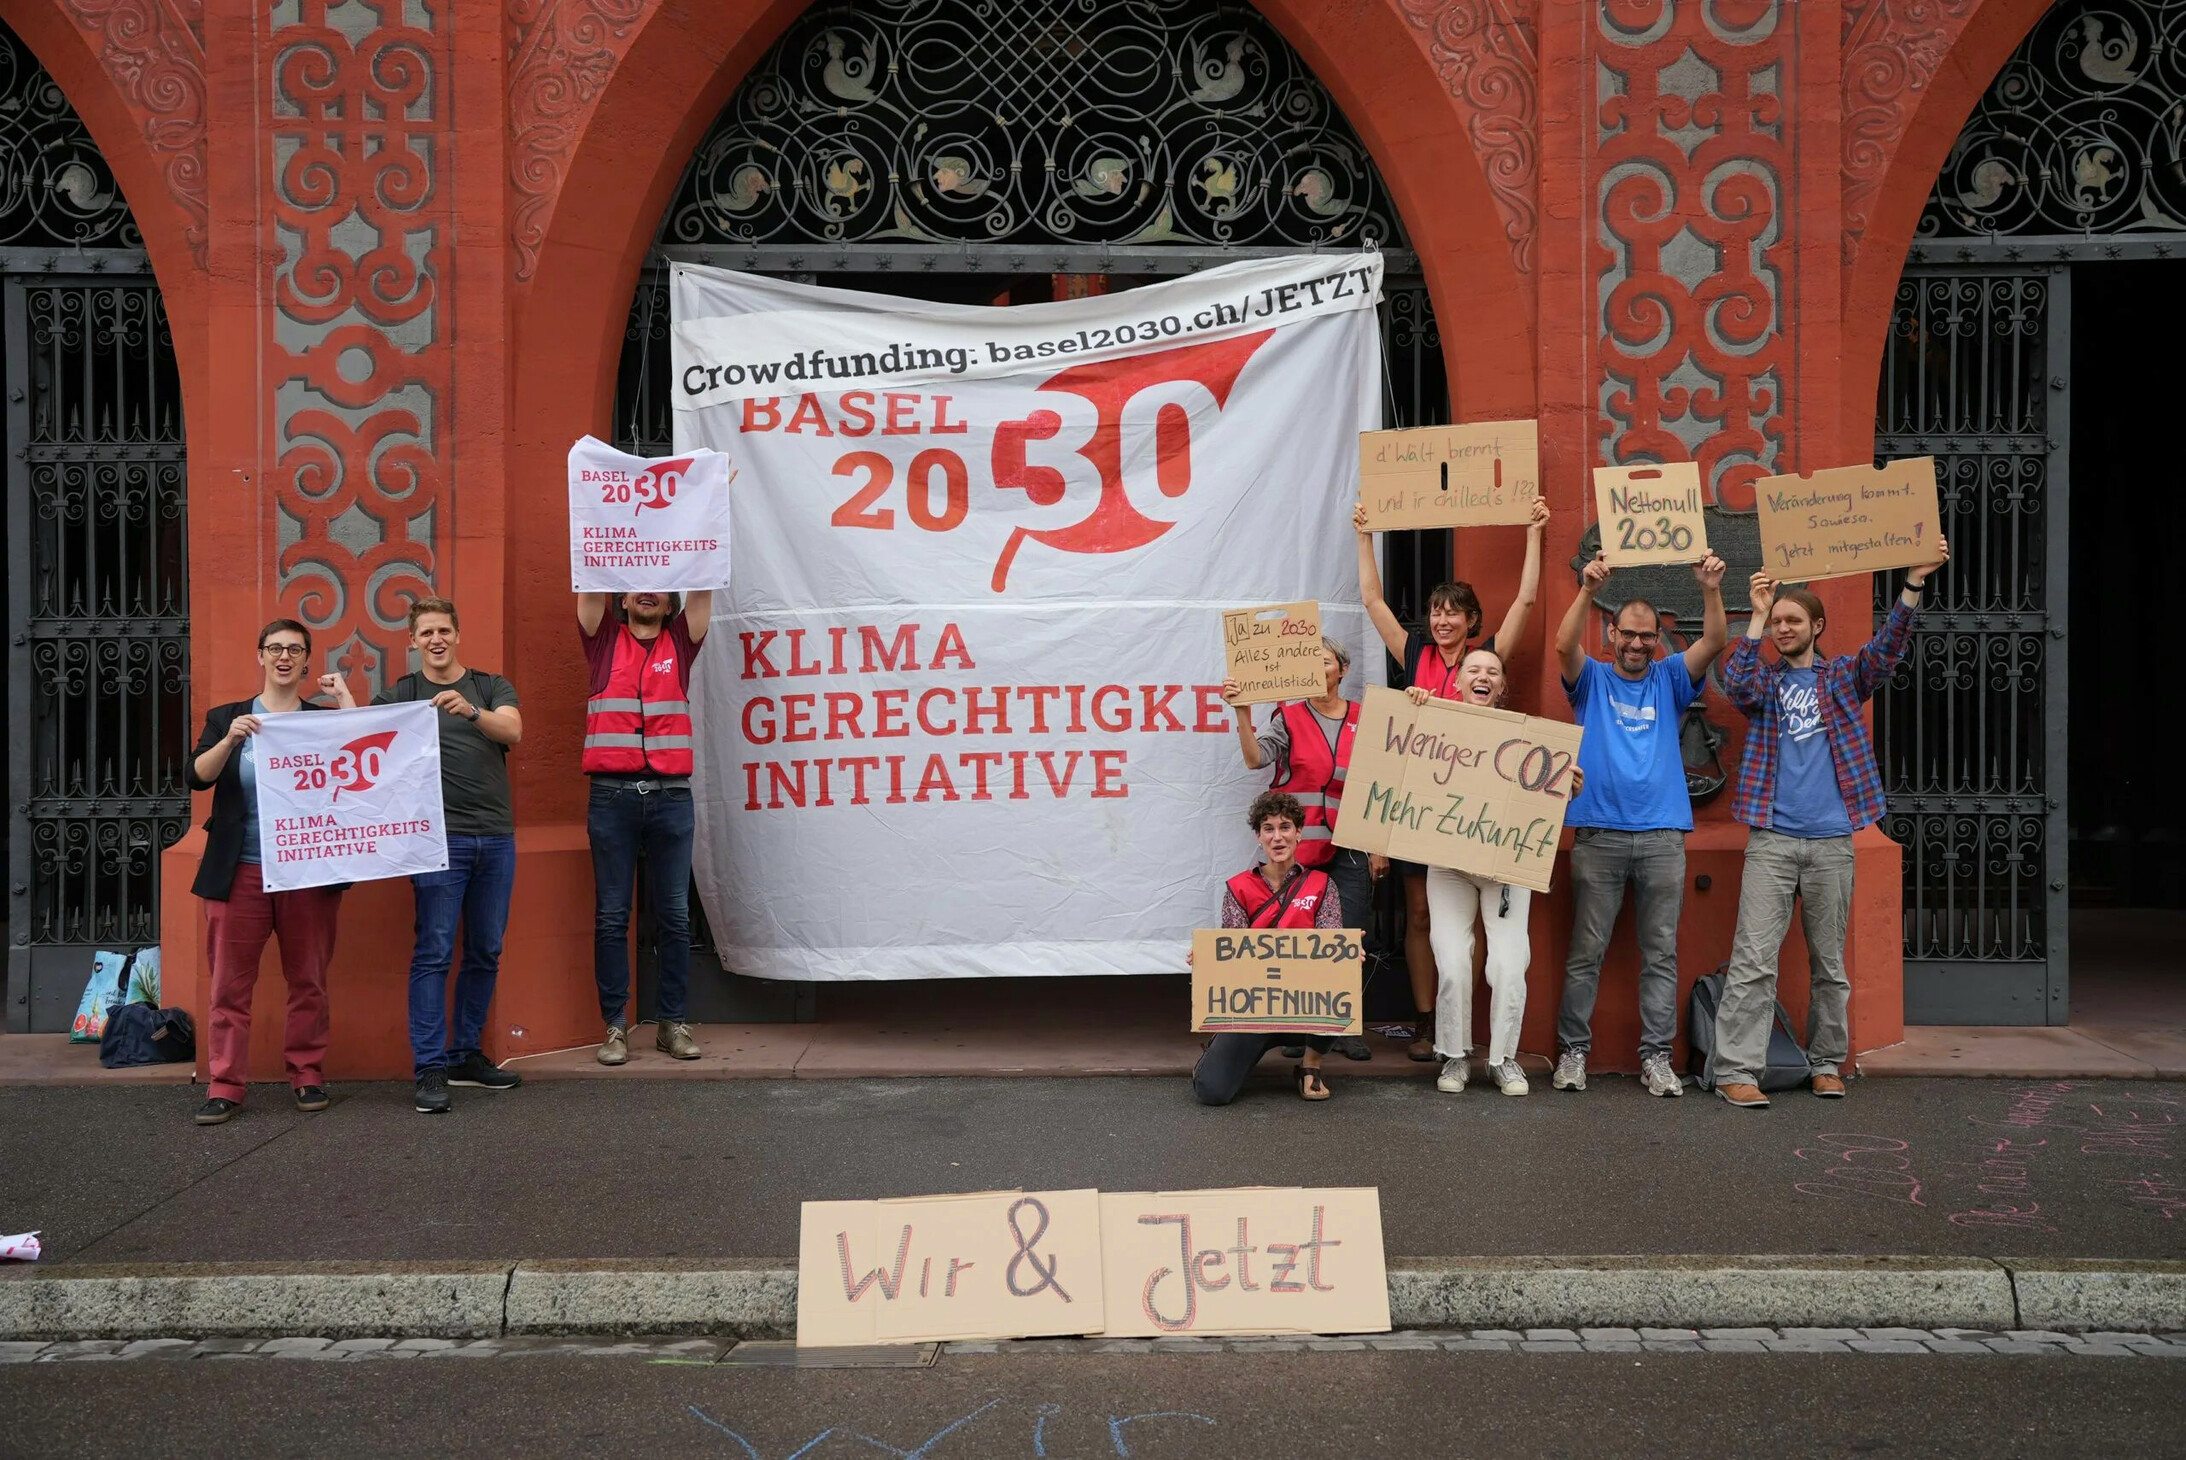 Klimagerechtigkeitsinitiative Basel 2030